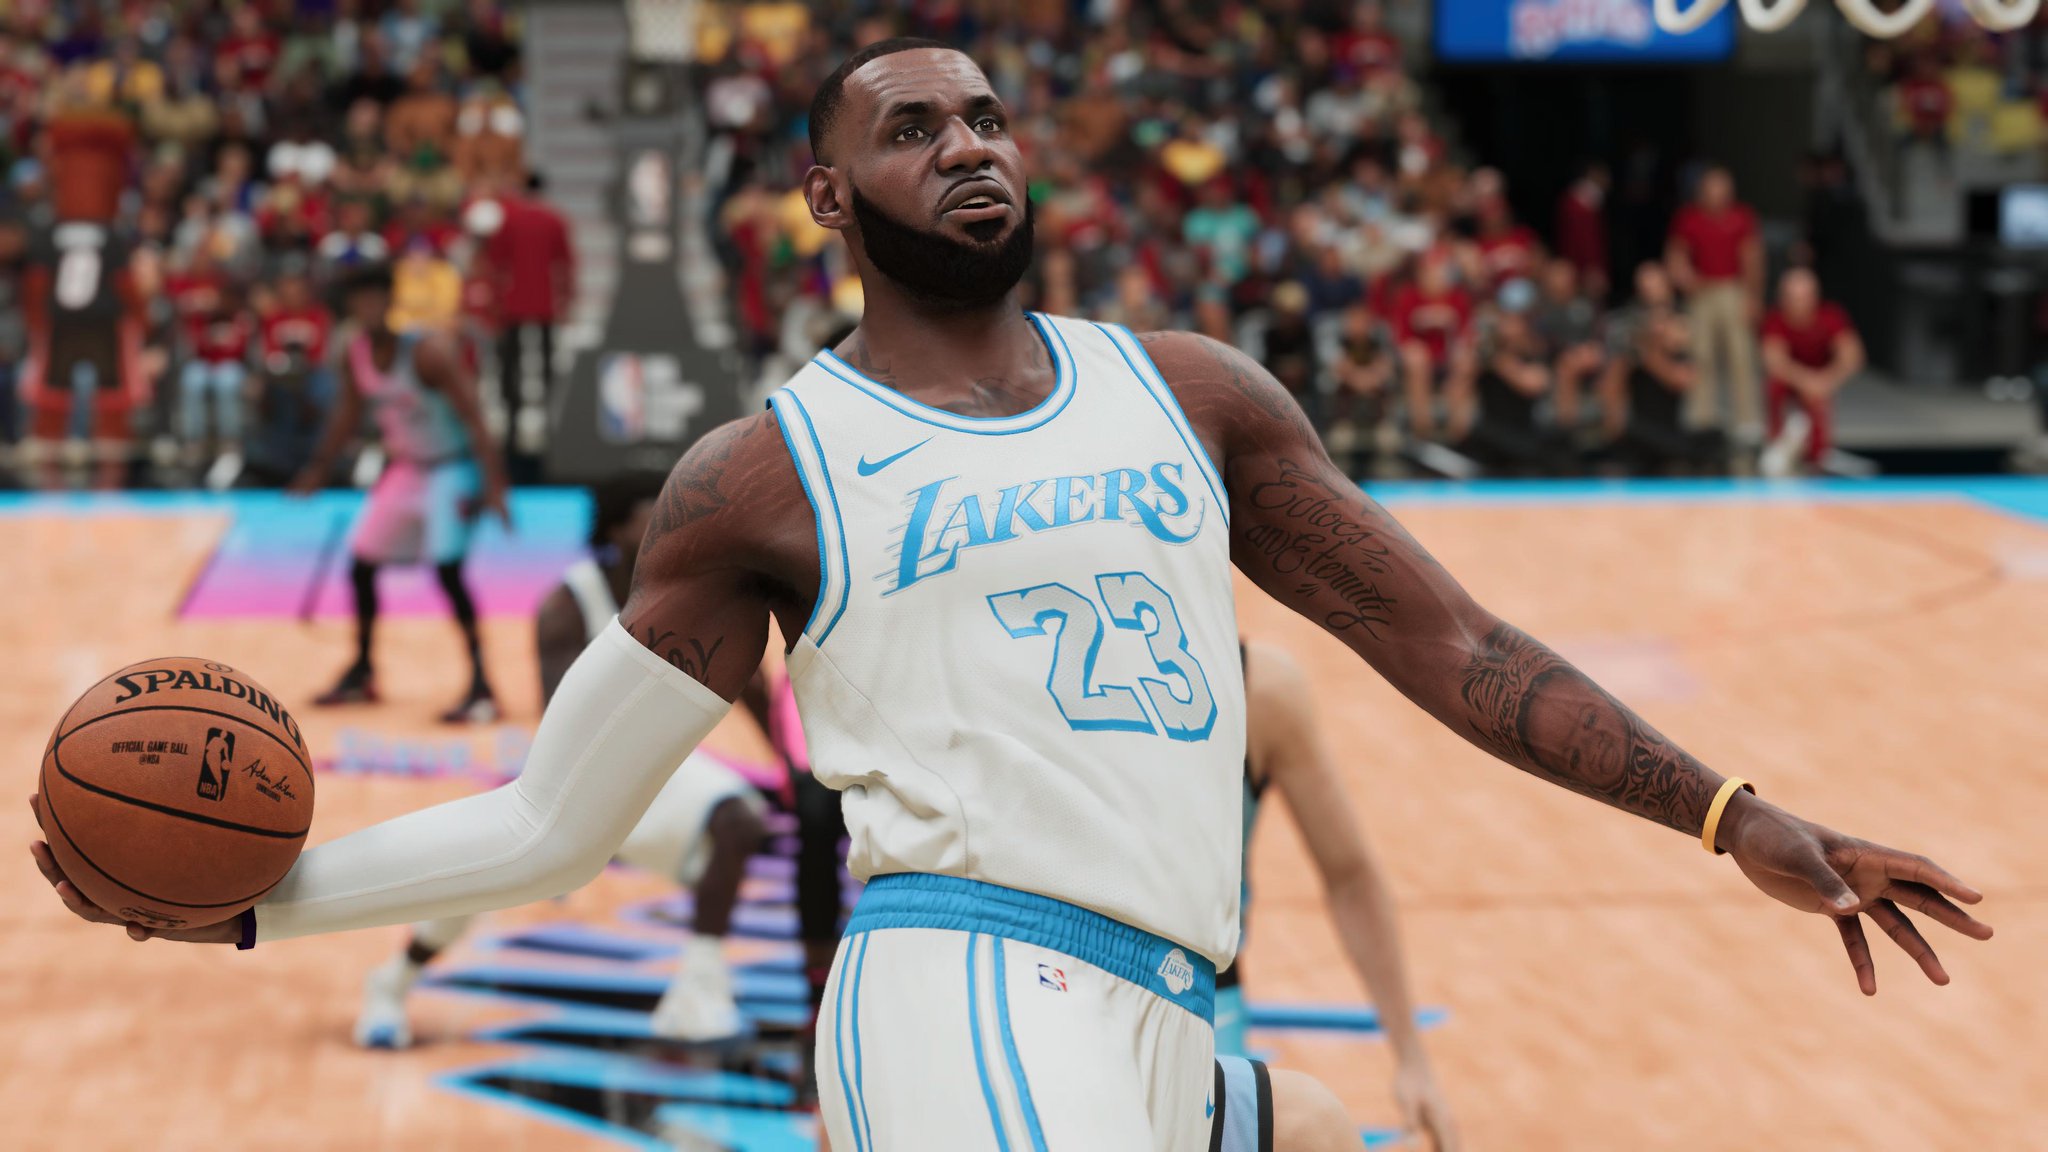 NBA 2K21: City Edition Jerseys 